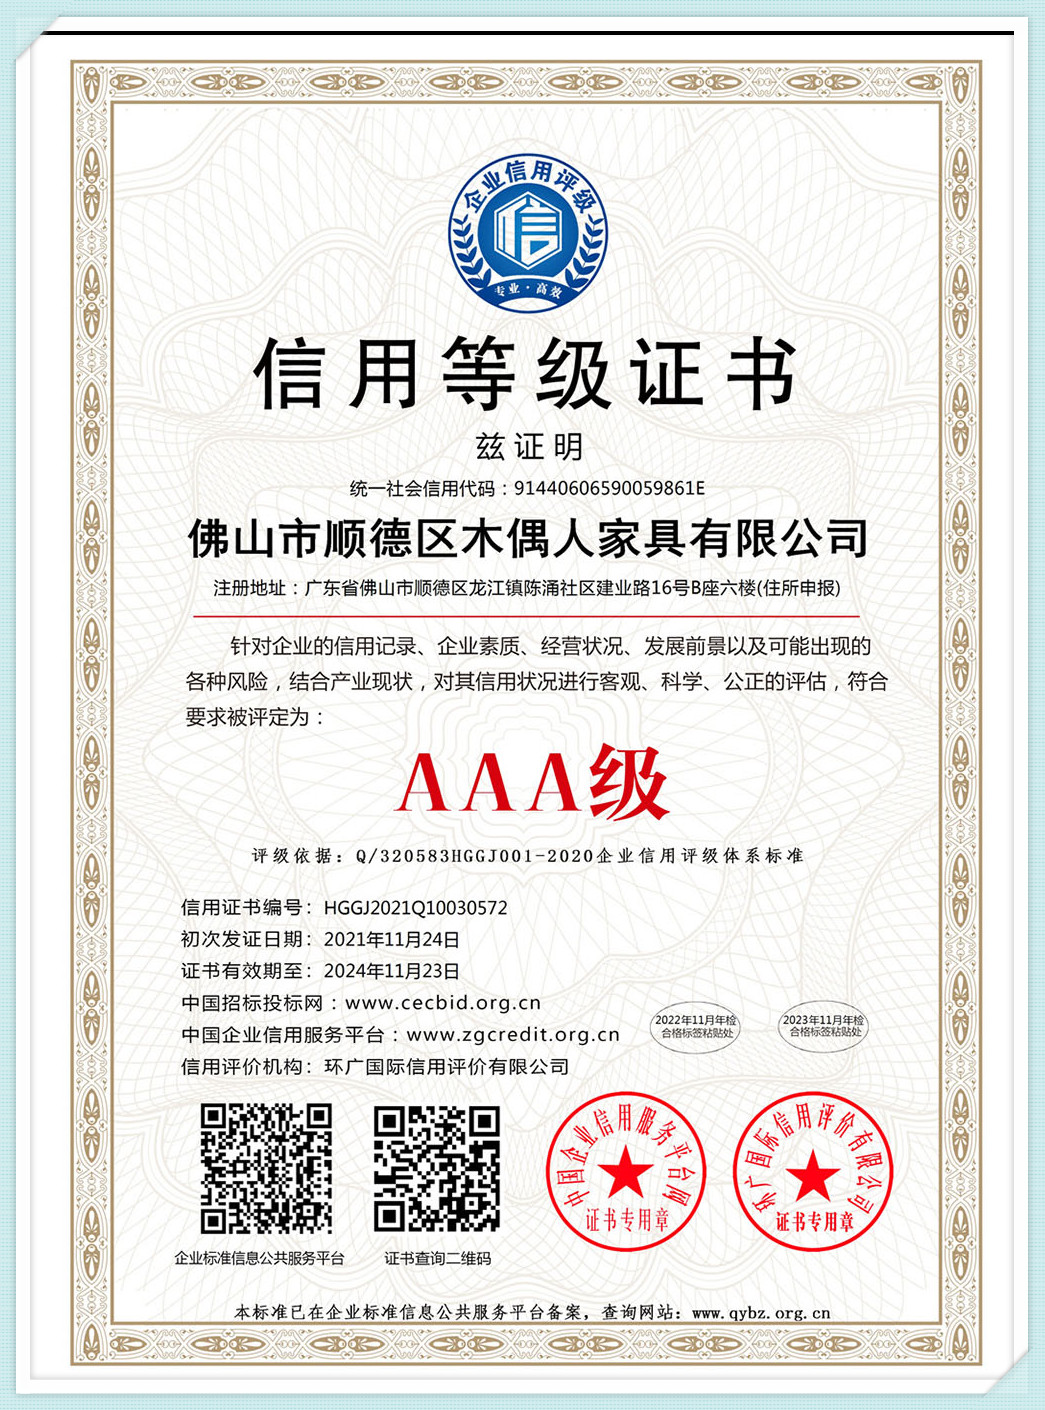 AAA Credit Rating Certificate